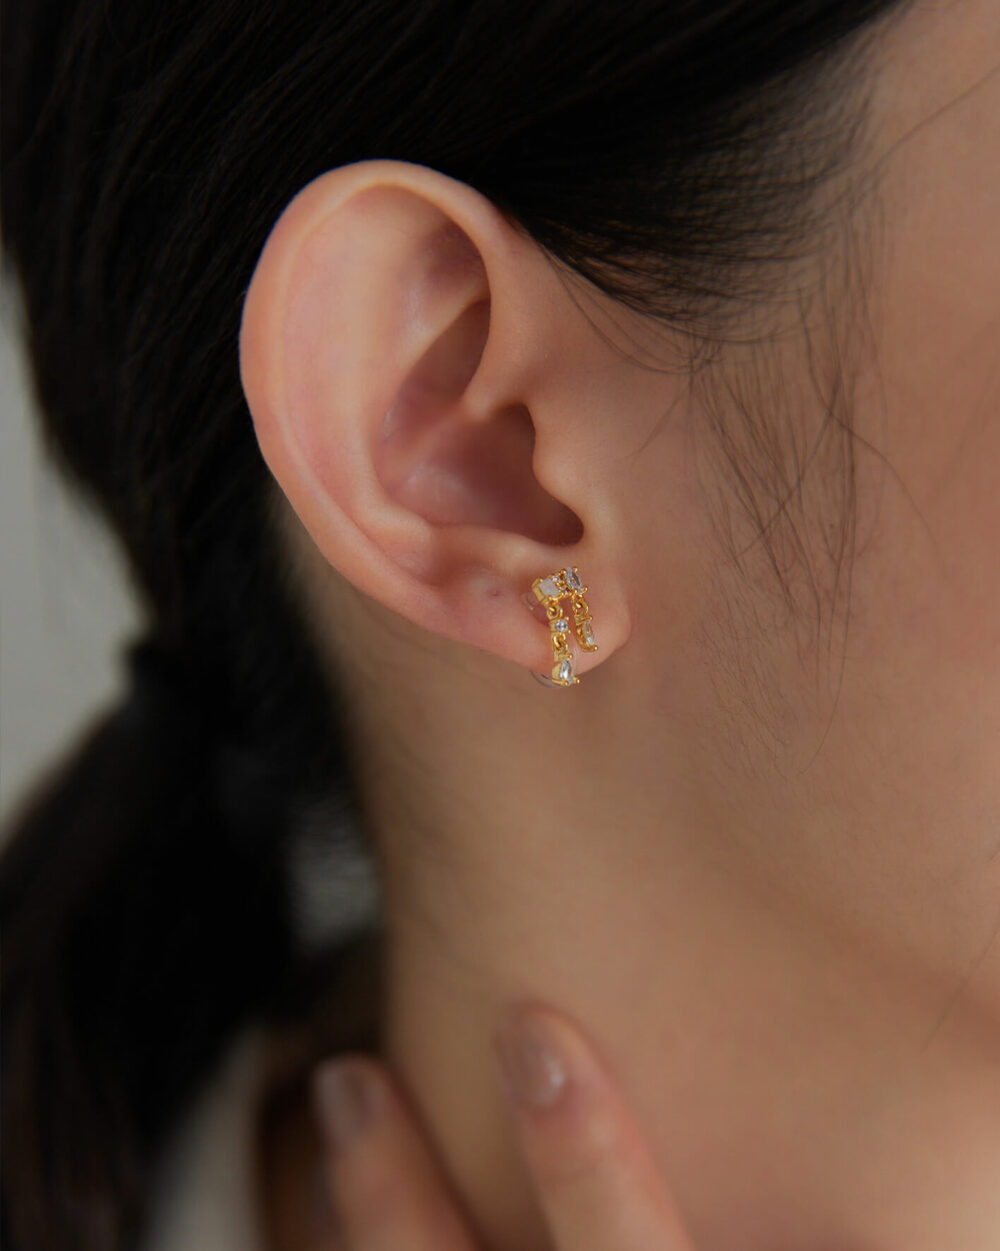 Eco安珂,韓國飾品,韓國耳環,韓國925純銀耳環,925純銀耳環,簡約耳環,貼耳耳環,氣質耳環,小耳環,耳環